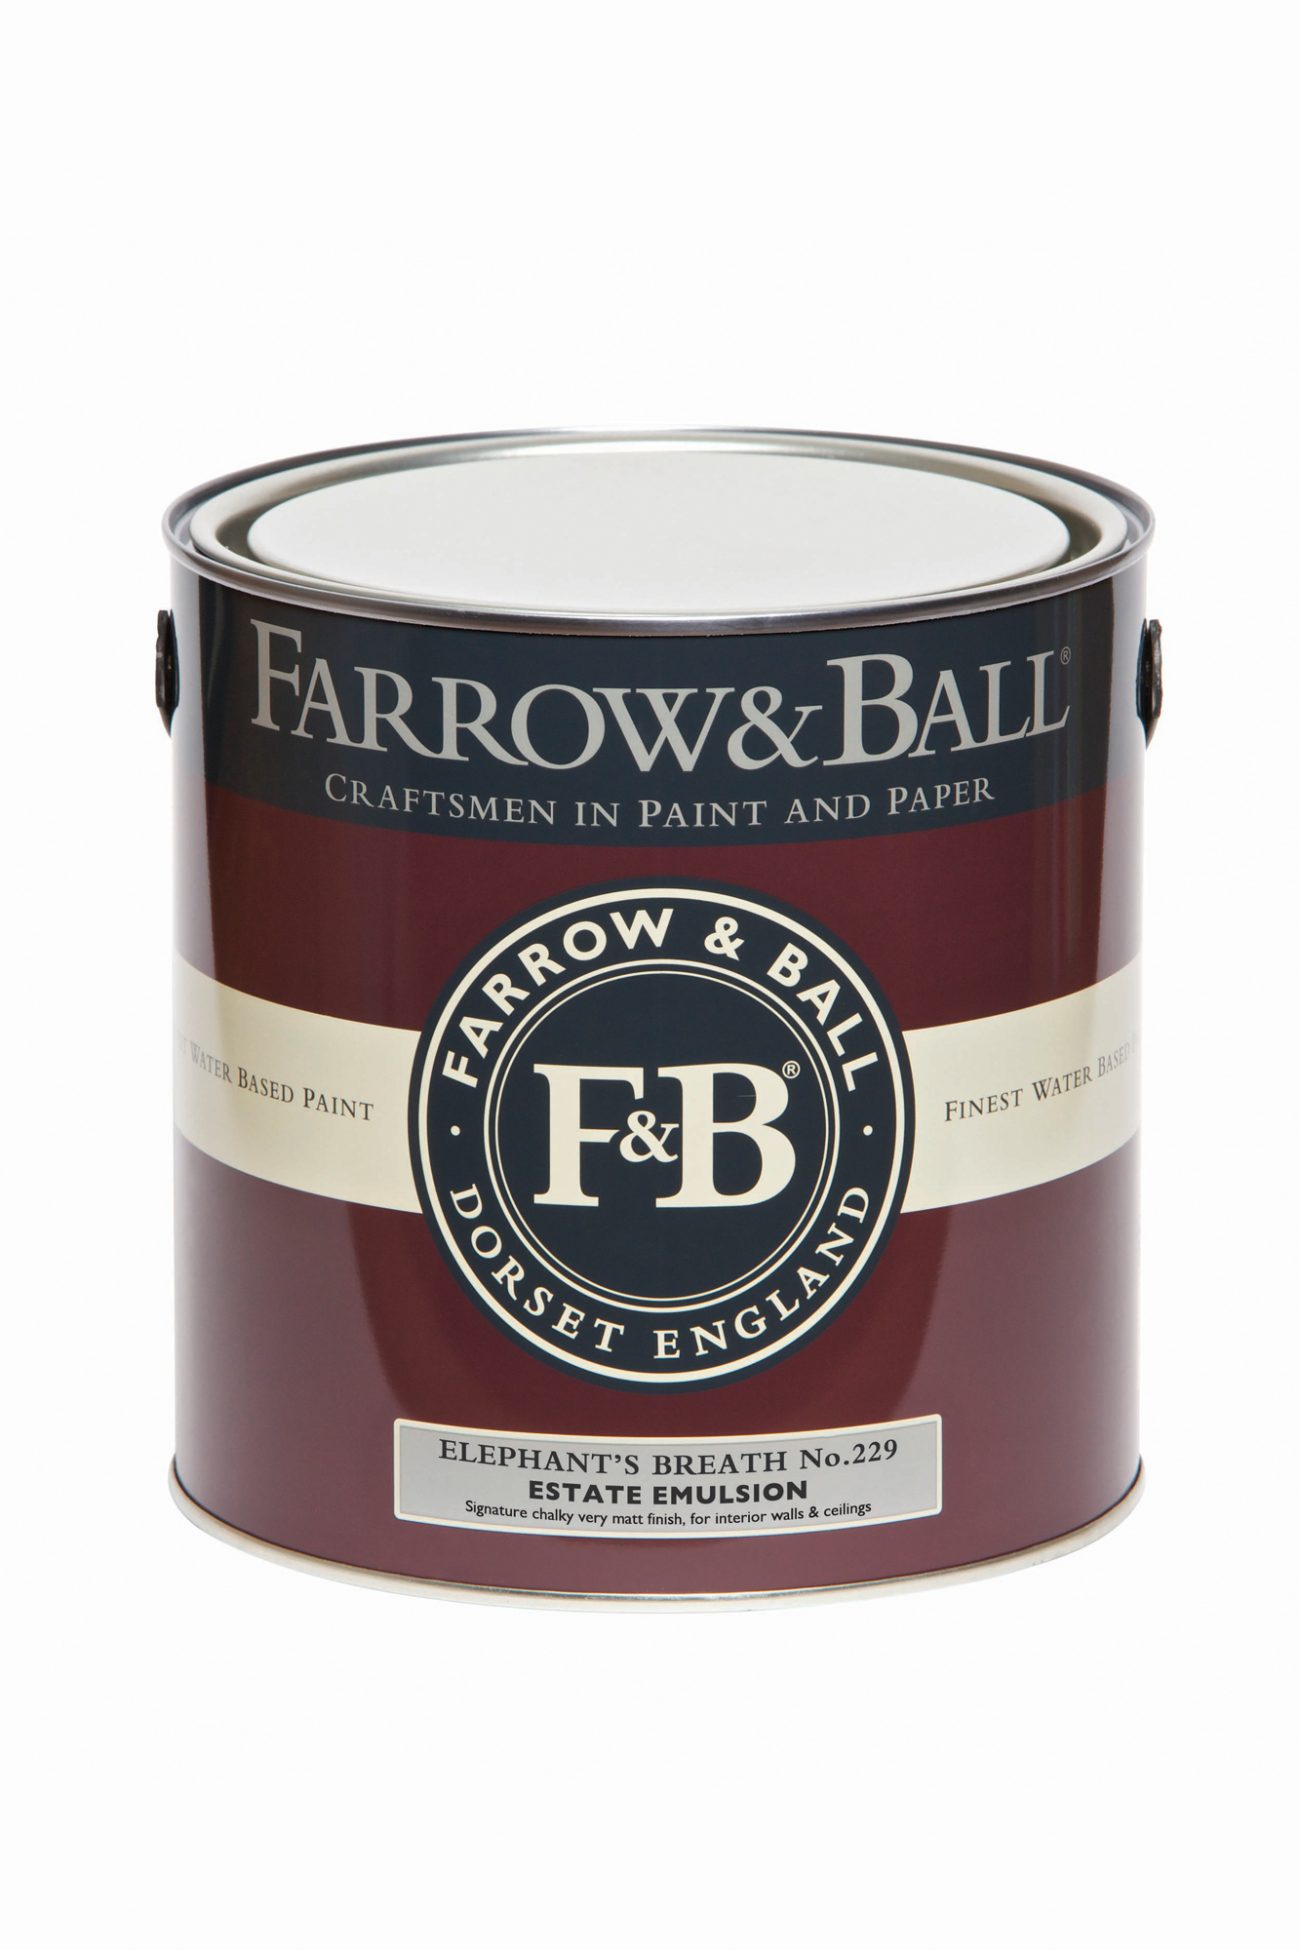 FARROW & BALL PAINT FINISHES